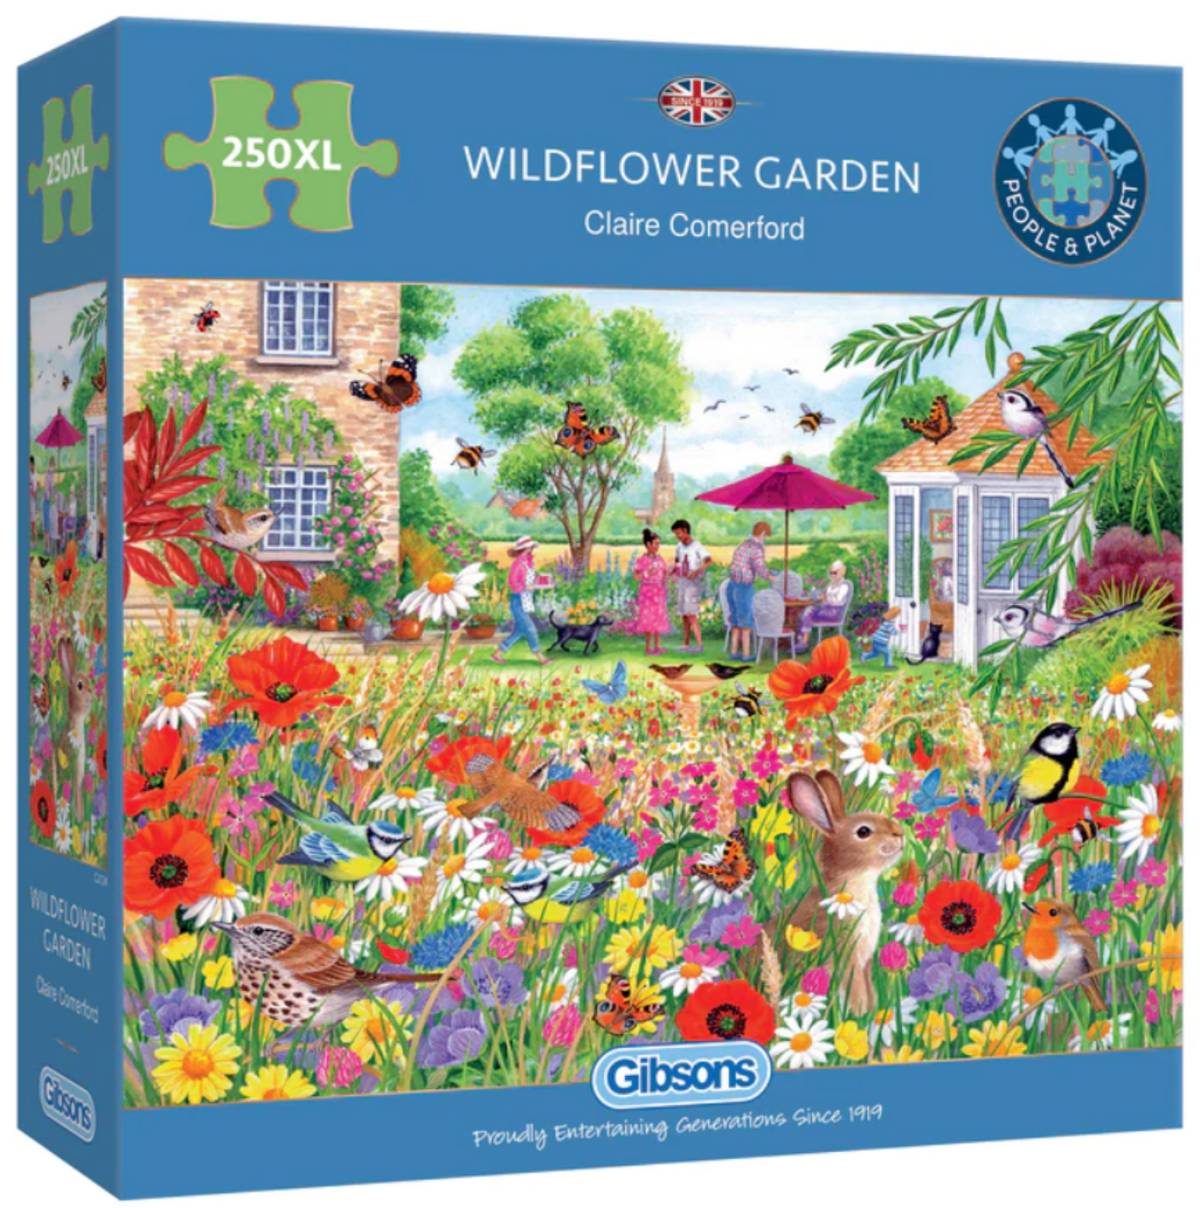 Wildflower Garden - 250 XL Piece Jigsaw Puzzle